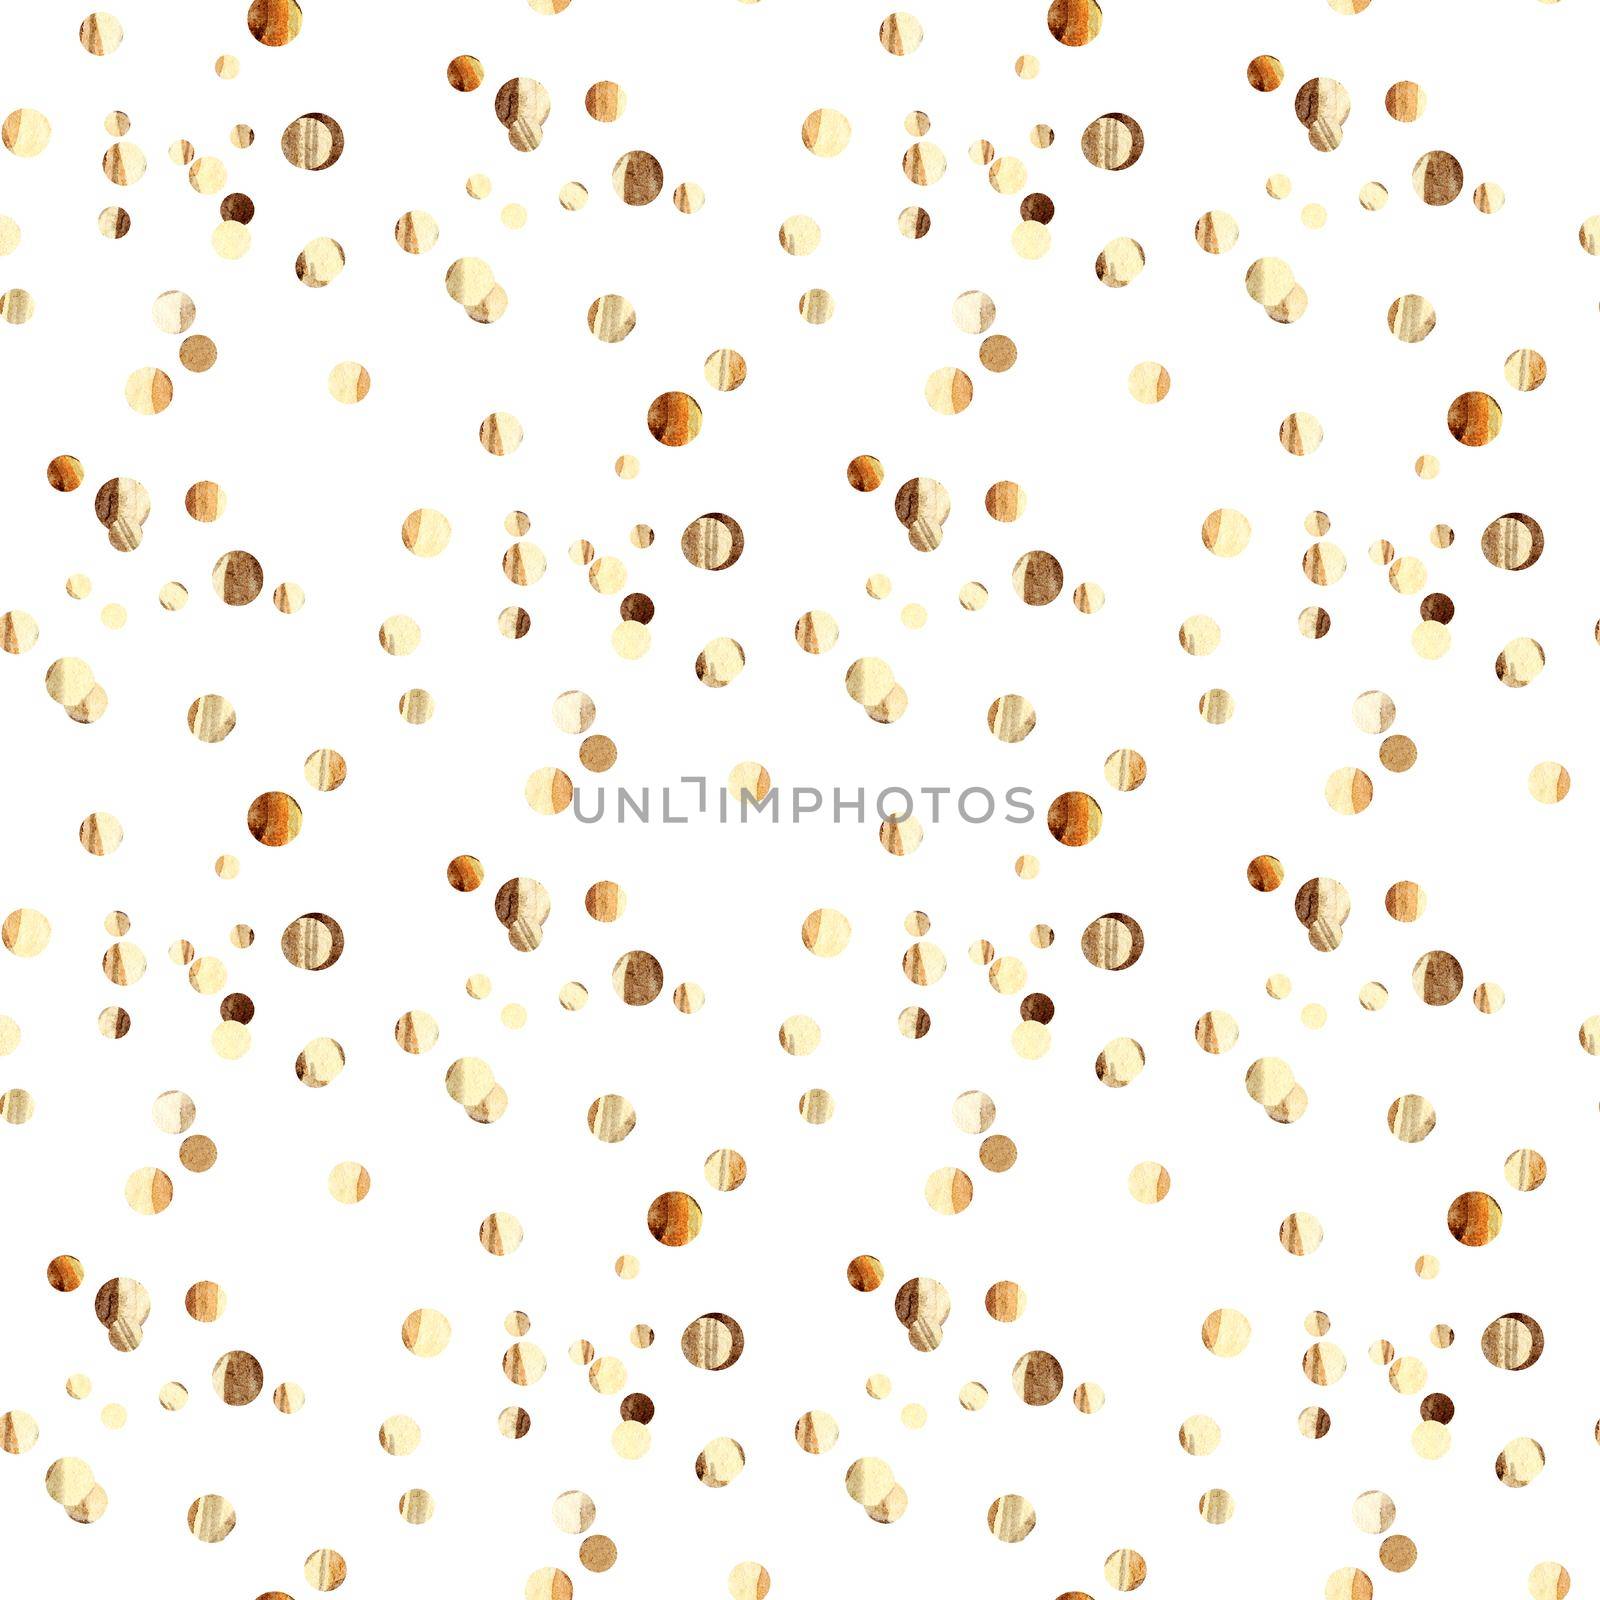 Golden confetti seamless pattern on white background